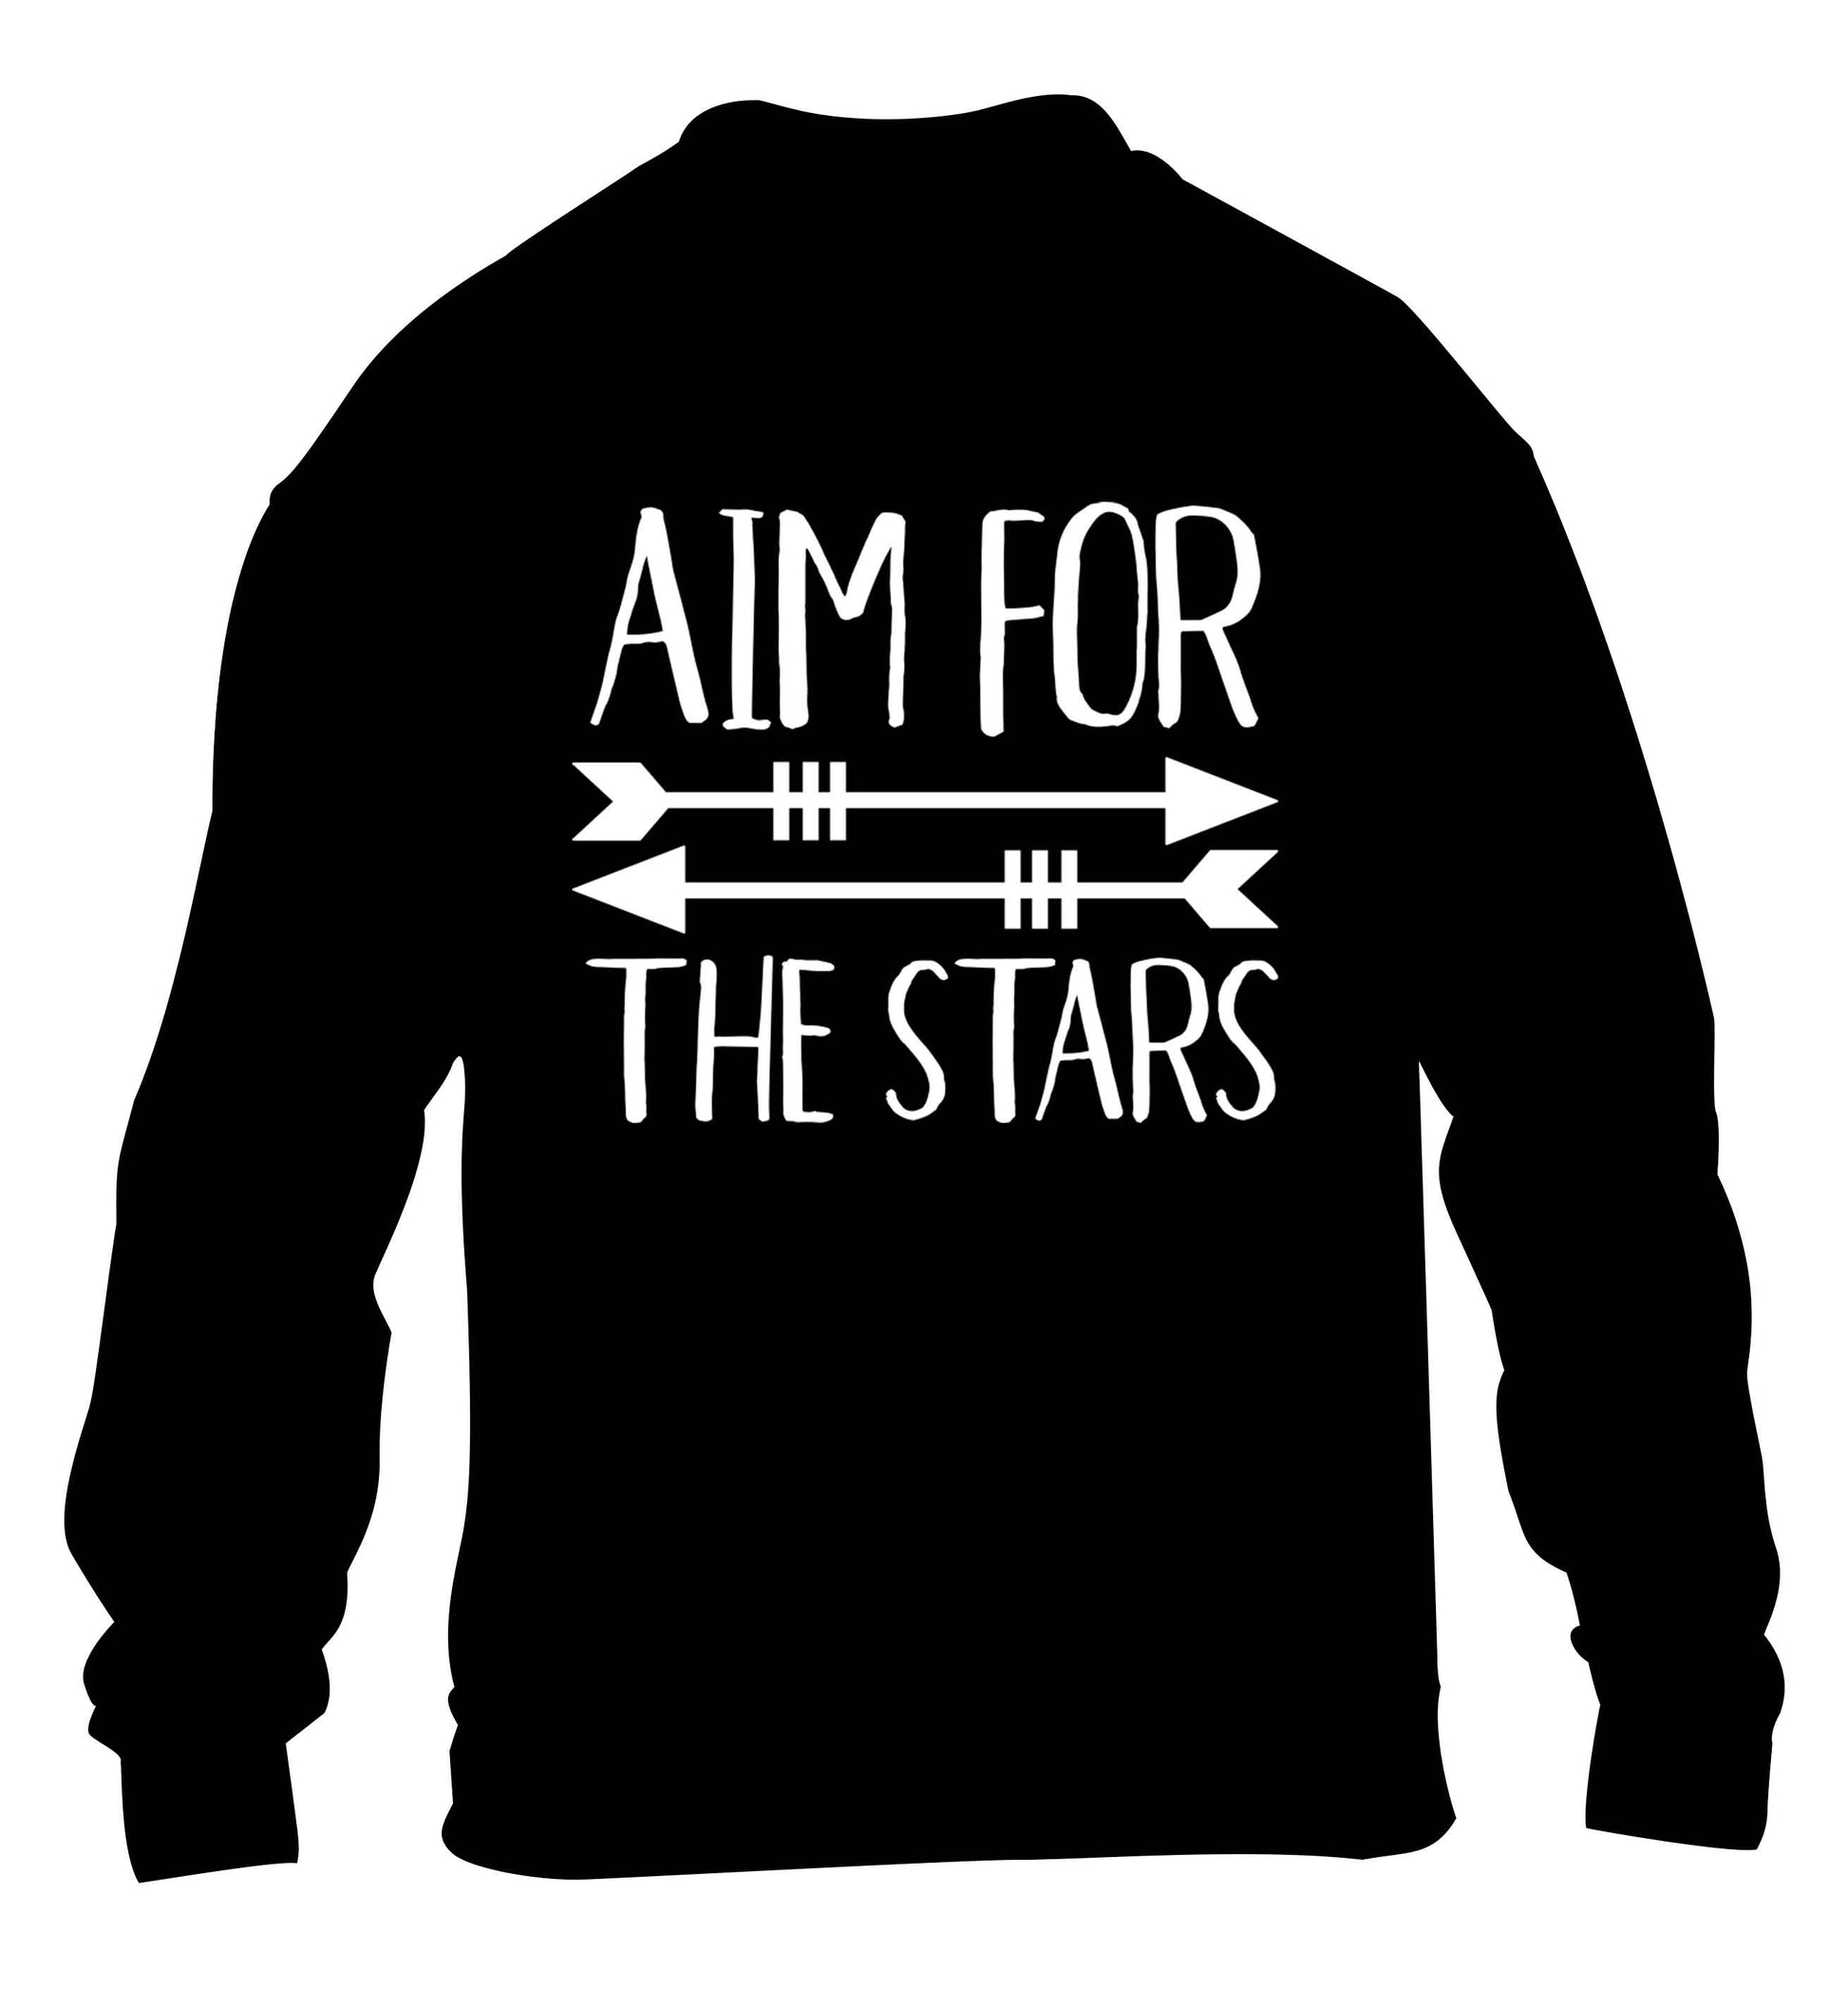 Aim for the stars children's black sweater 12-13 Years